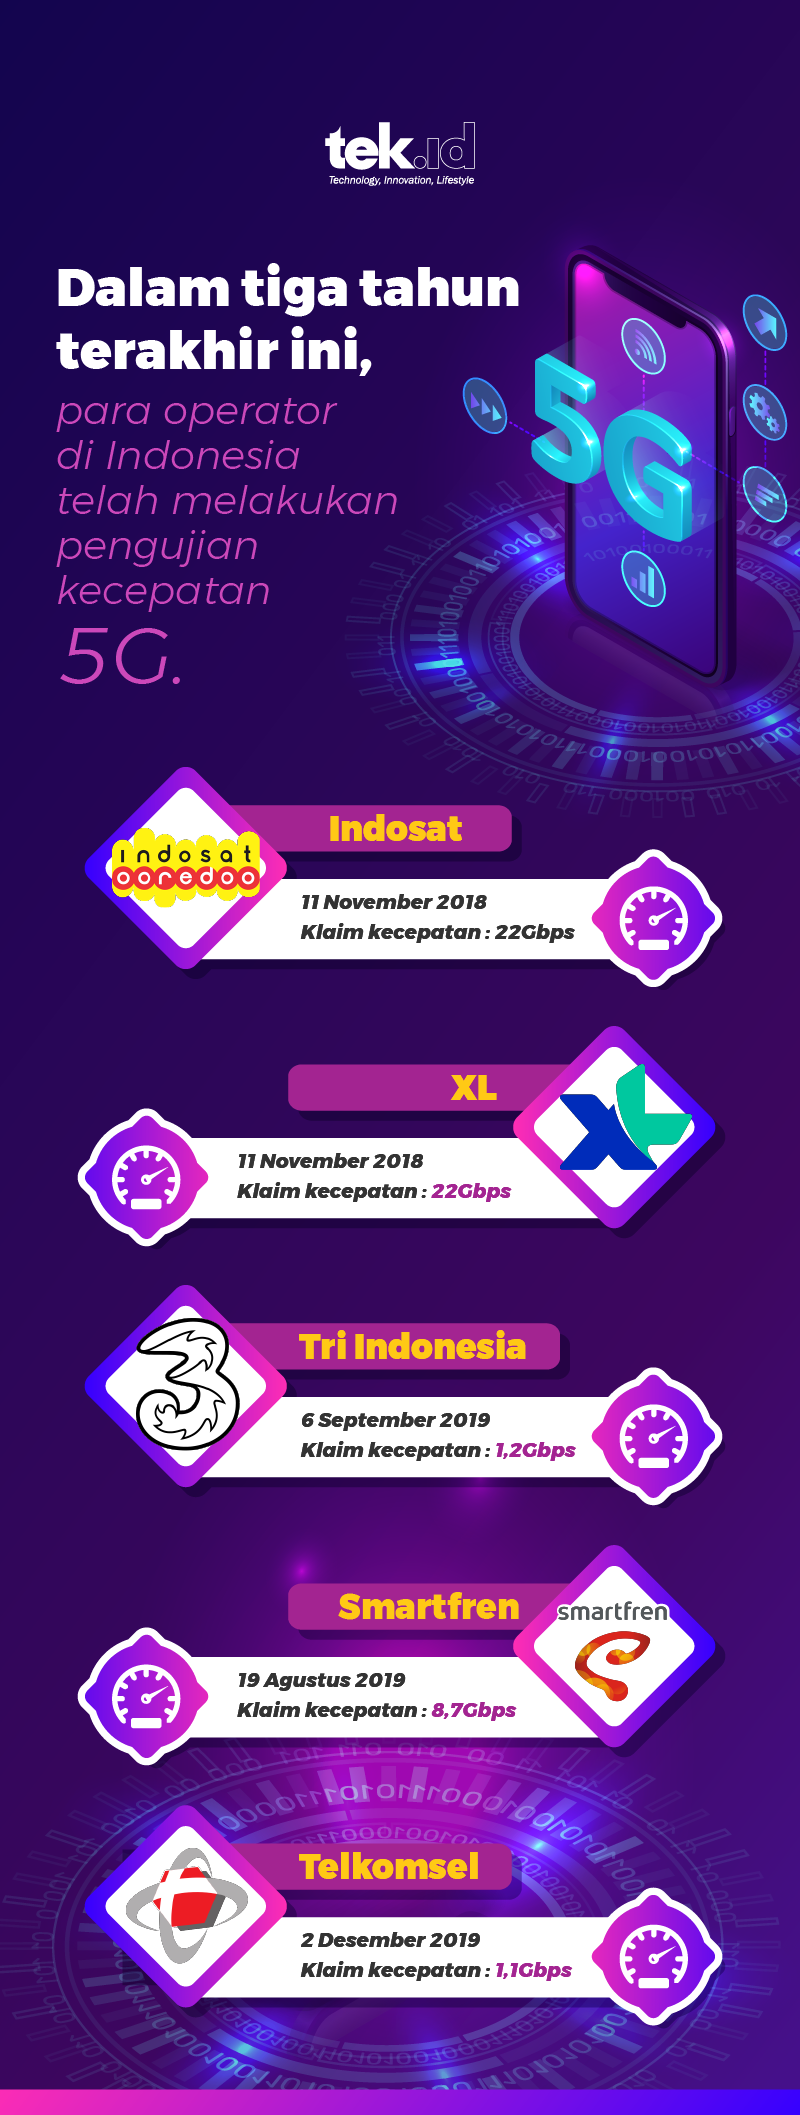 Uji coba 5G operator telekomunikasi indonesia